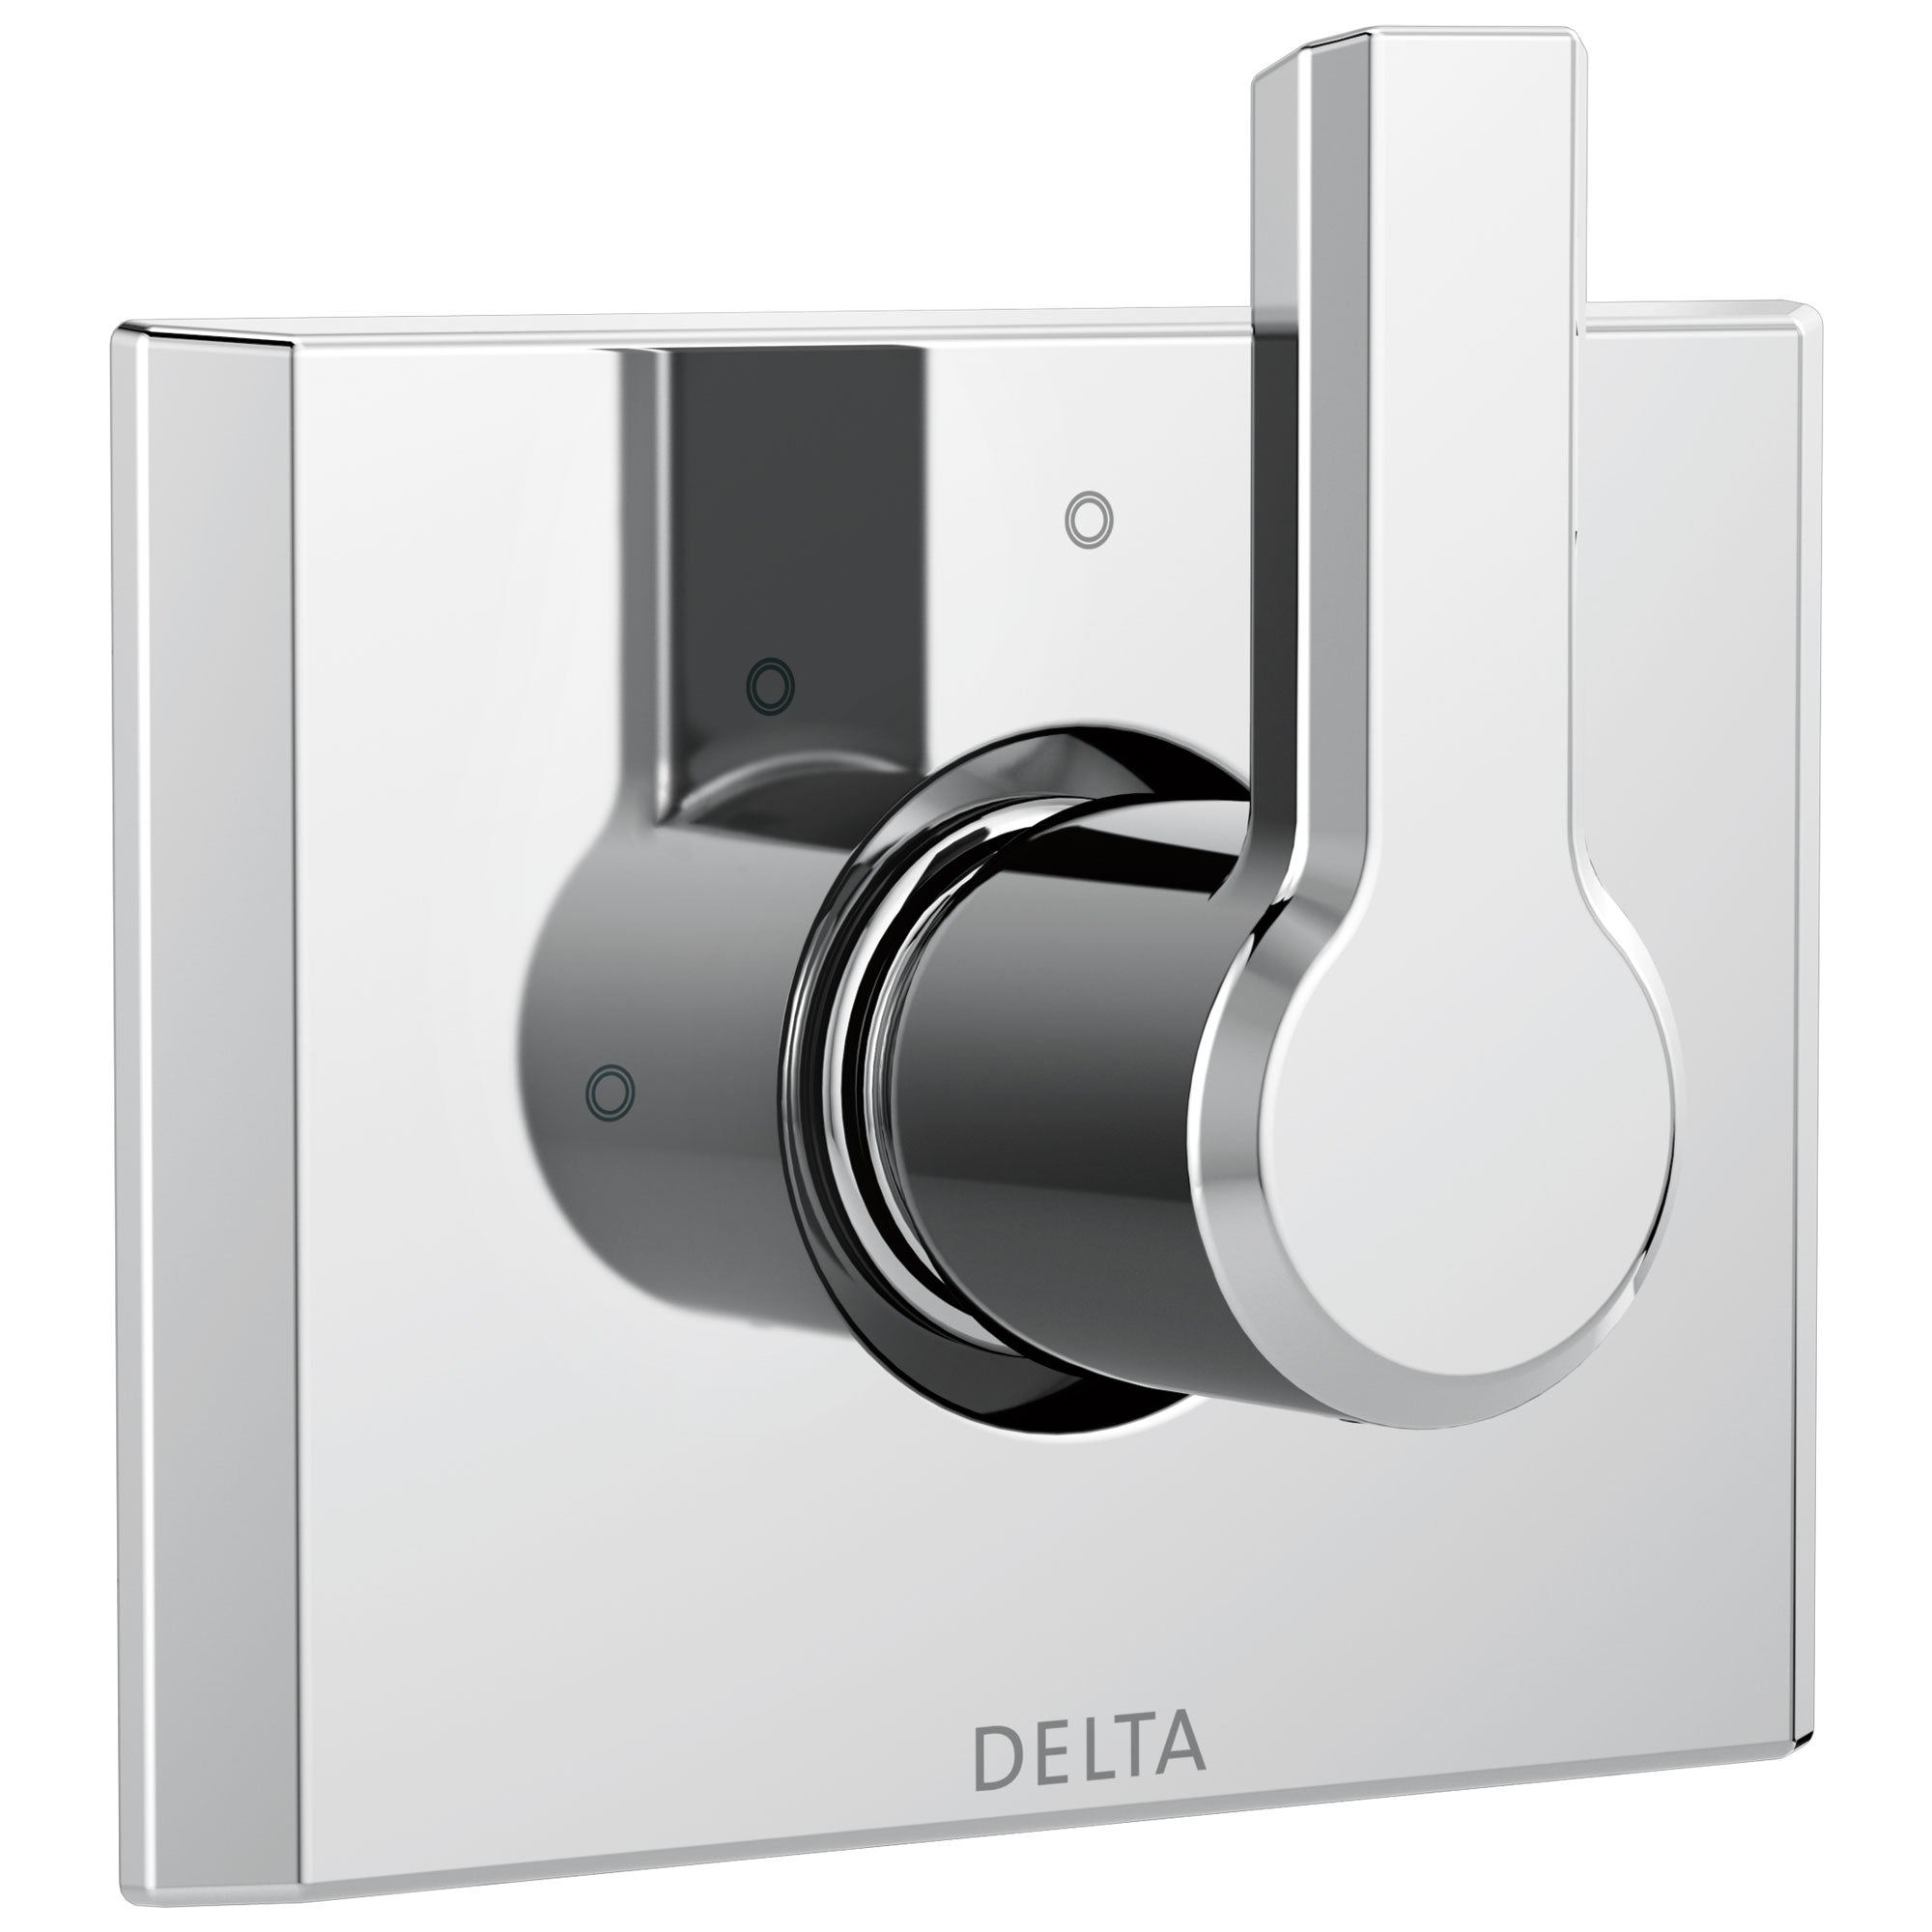 Delta Pivotal Modern Chrome Finish 3-Setting 2 Outlet Port Shower System Diverter Includes Lever Handle and Rough-in Valve D3573V